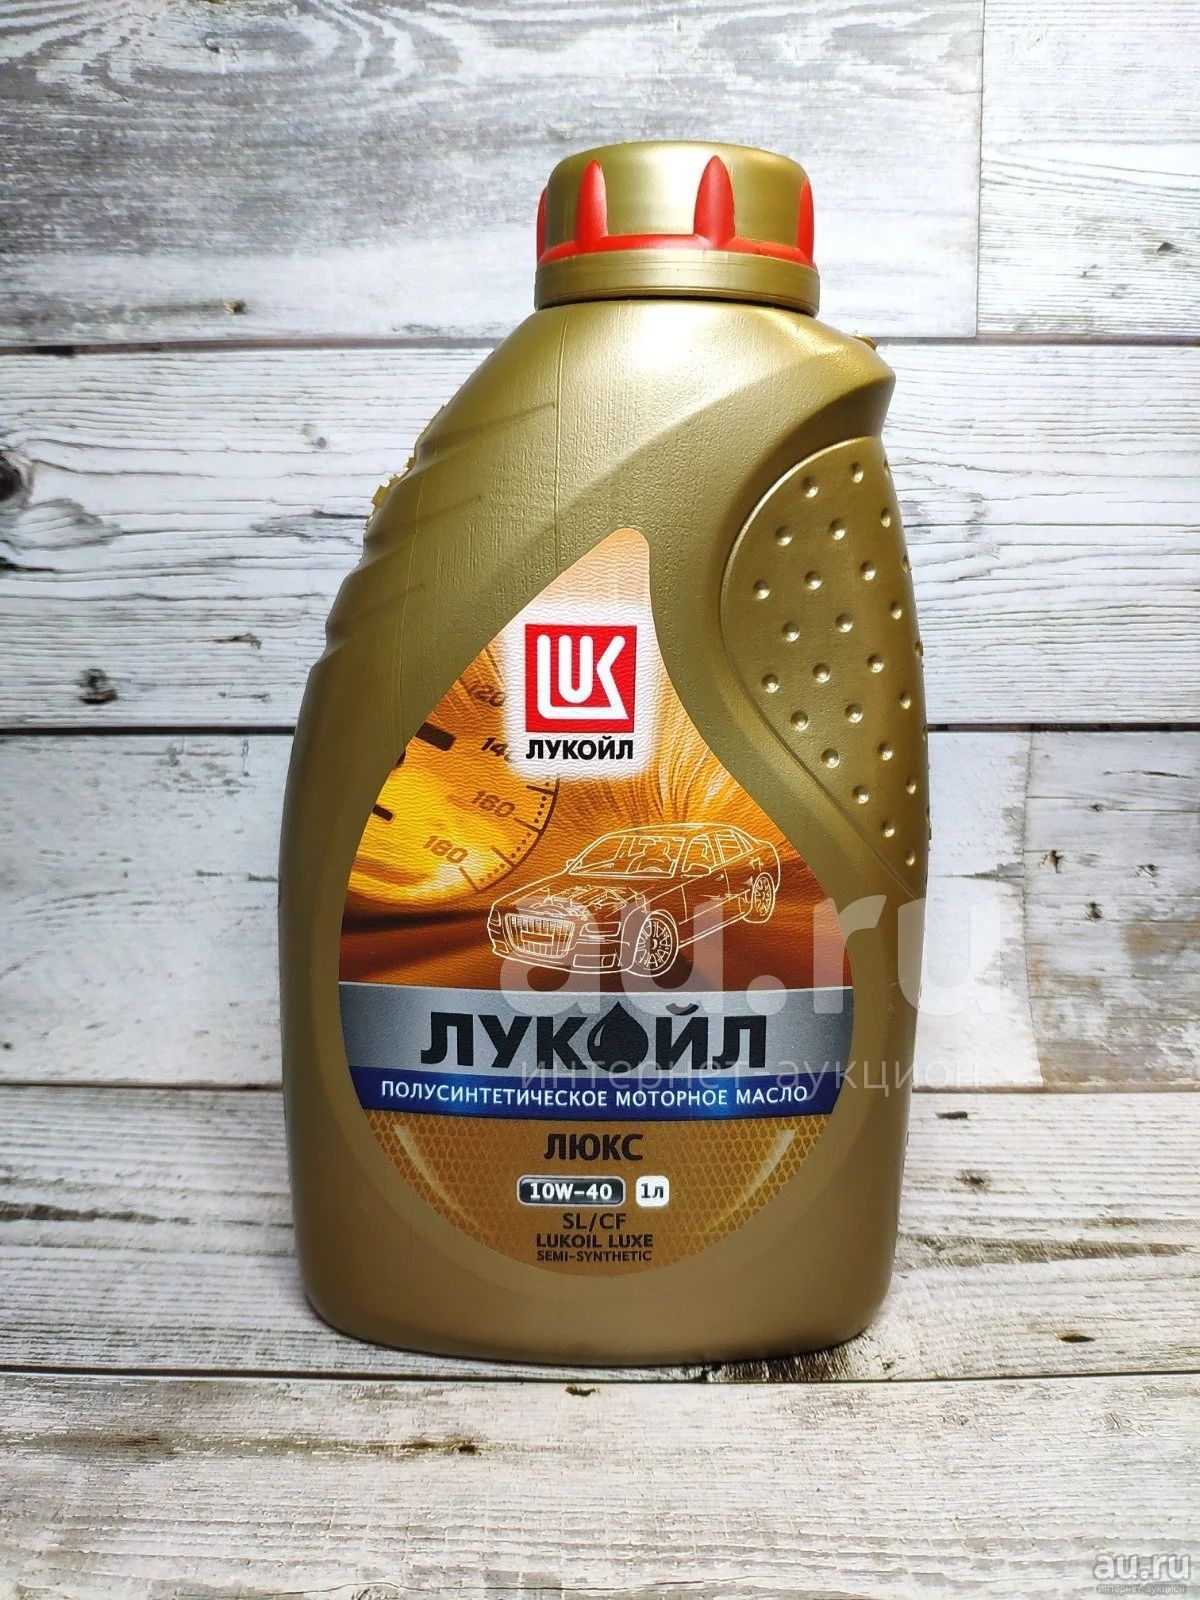 Lukoil Luxe 10w-40. Лукойл Люкс 5-40 полусинтетика 1 литр. Лукойл 10 на 40 полусинтетика 1 литр. Масло Лукойл Люкс в Весту.